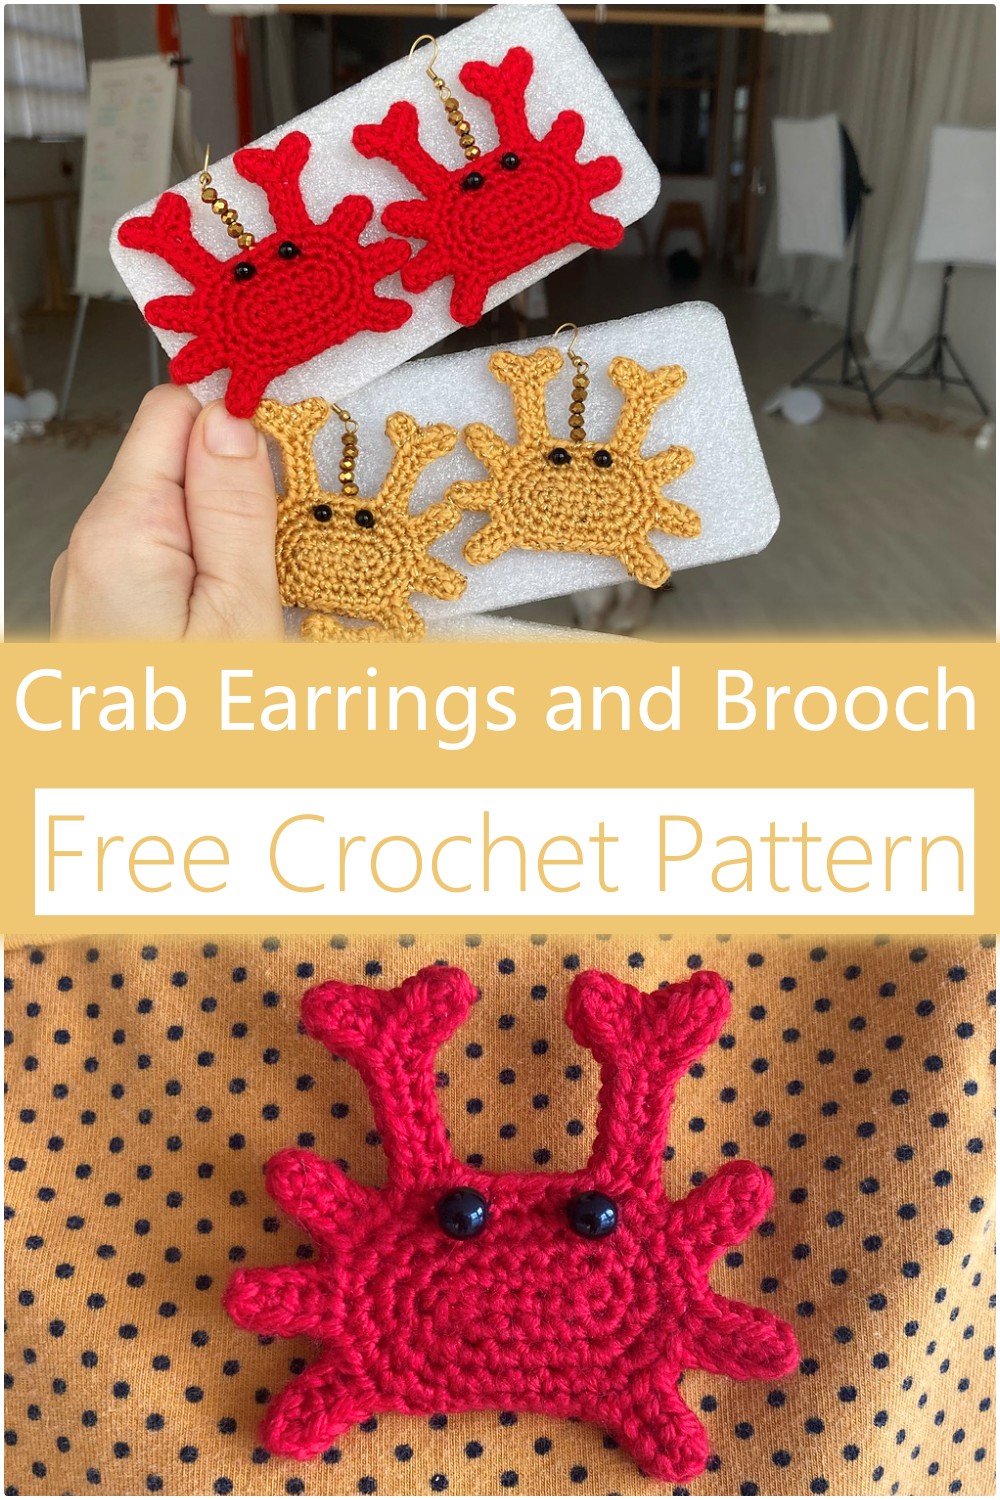 Crochet Earrings And Brooch In Crab Design